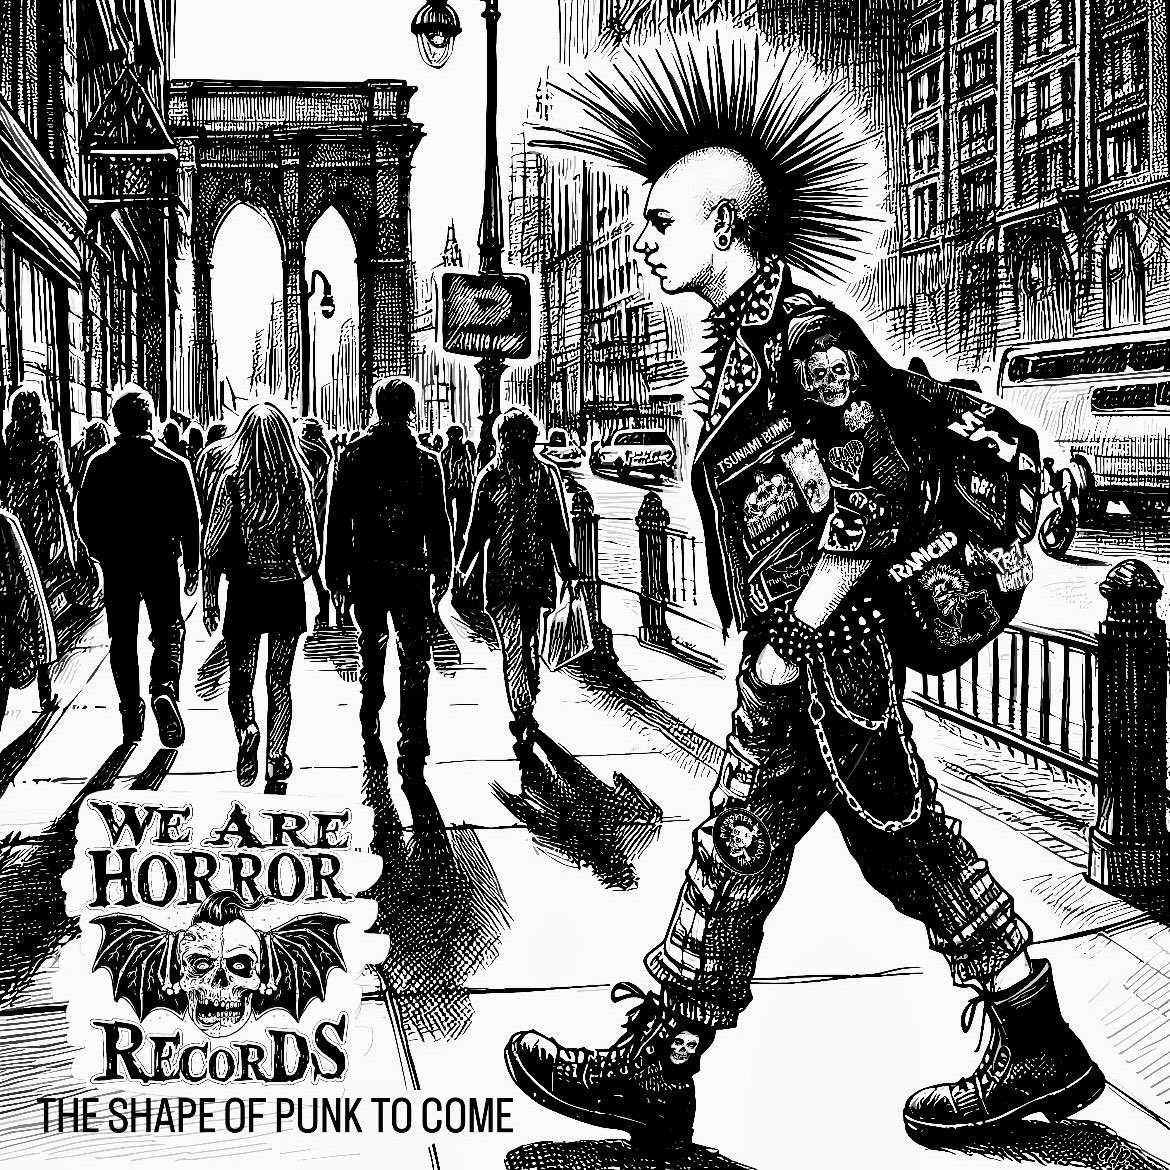 The shape of punk to come …is Horror!

#horrorpunk #punk #punkrock #theshapeofpunktocome #wearehorrorrecords #recordlabel #horrorpunksnotdeadvol3 #rock #metal #horror #oldschoolpunk